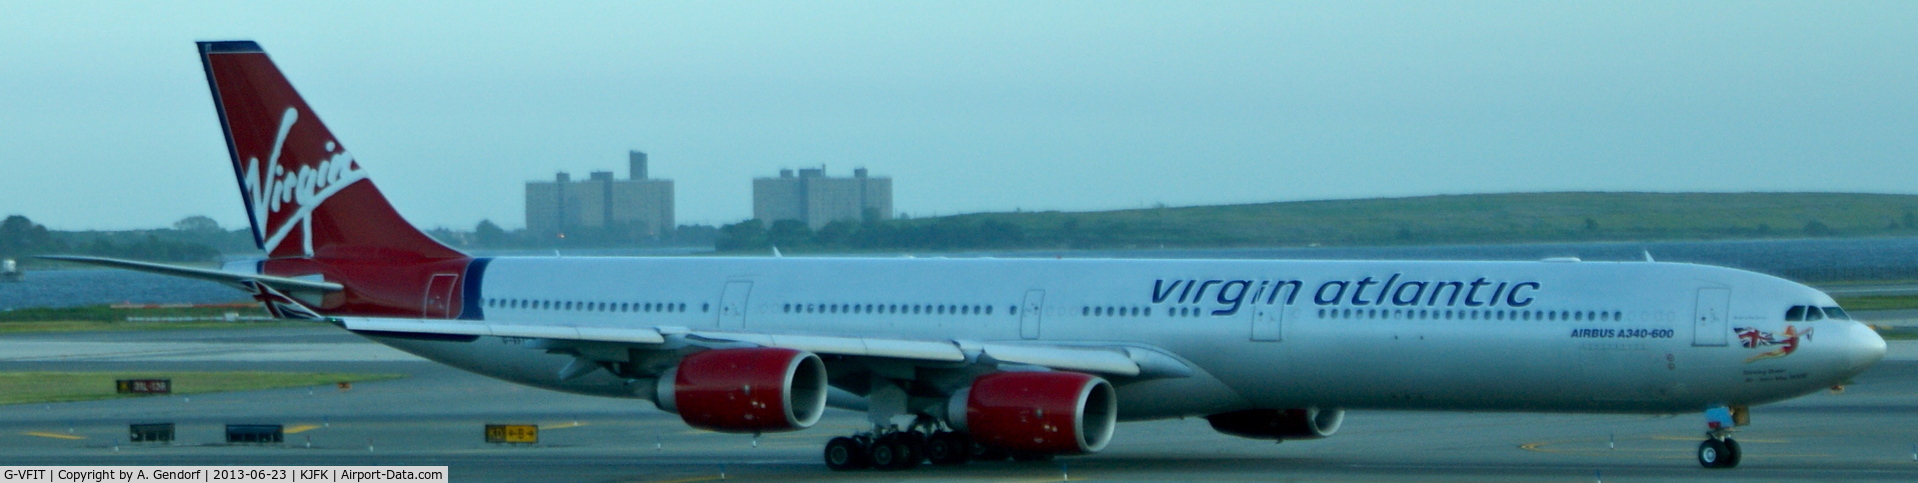 G-VFIT, 2006 Airbus A340-642 C/N 753, Virgin Atlantic, seen here taxiing to the runway for departure at New York - JFK(KJFK)